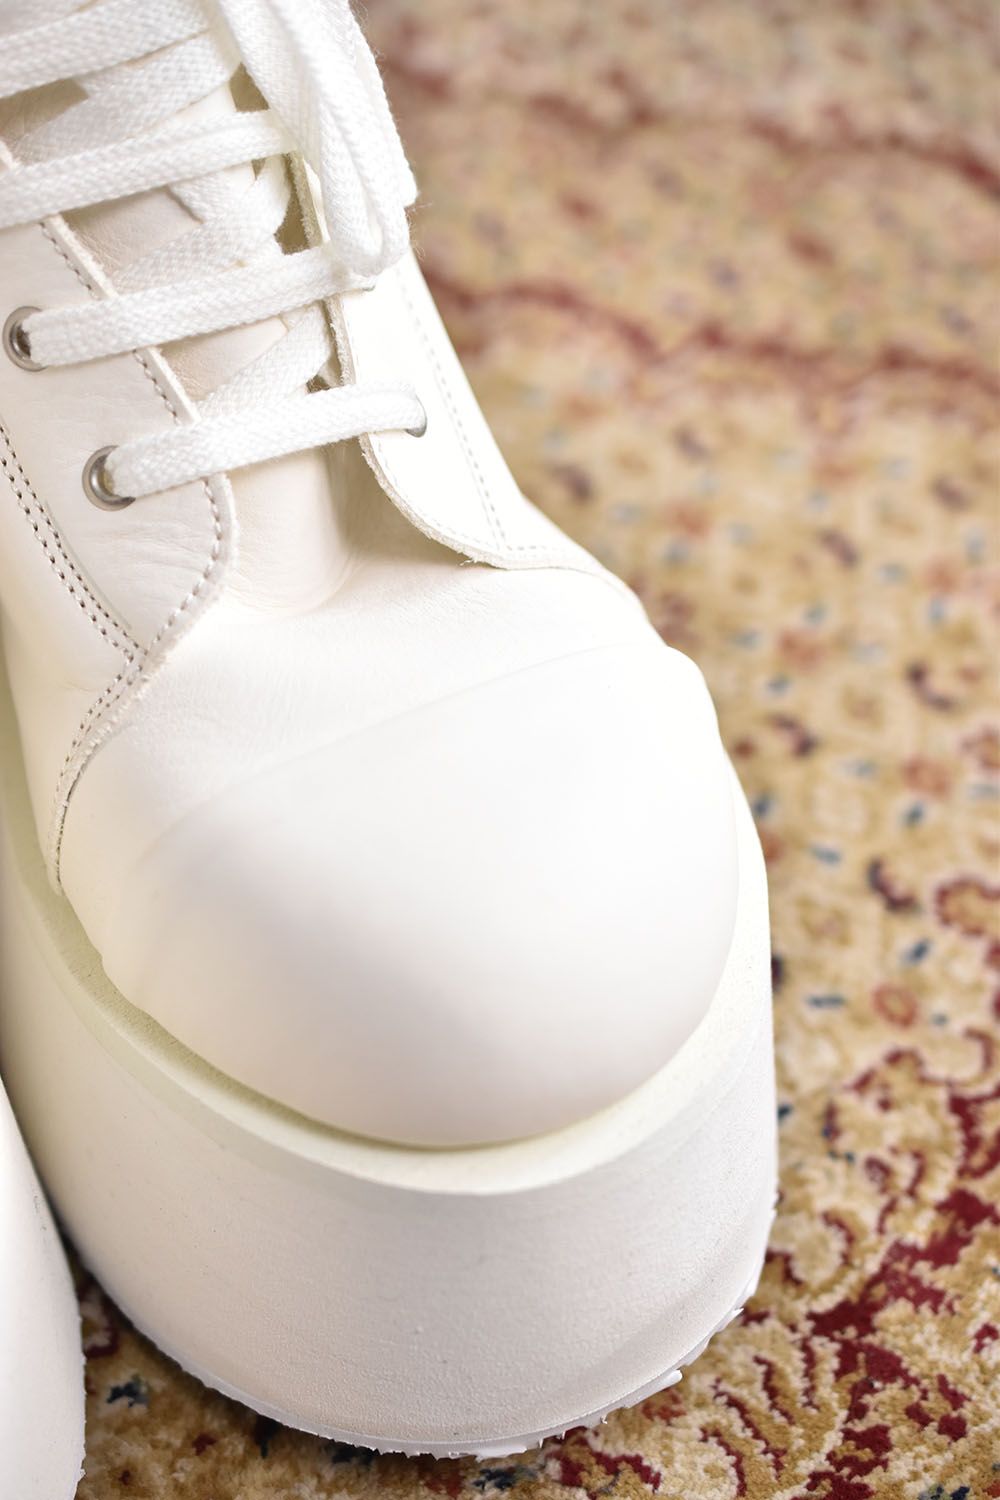 Platform Hi-cut Sneakers"White×White"/プラットホームハイカットスニーカー"ホワイト×ホワイト"